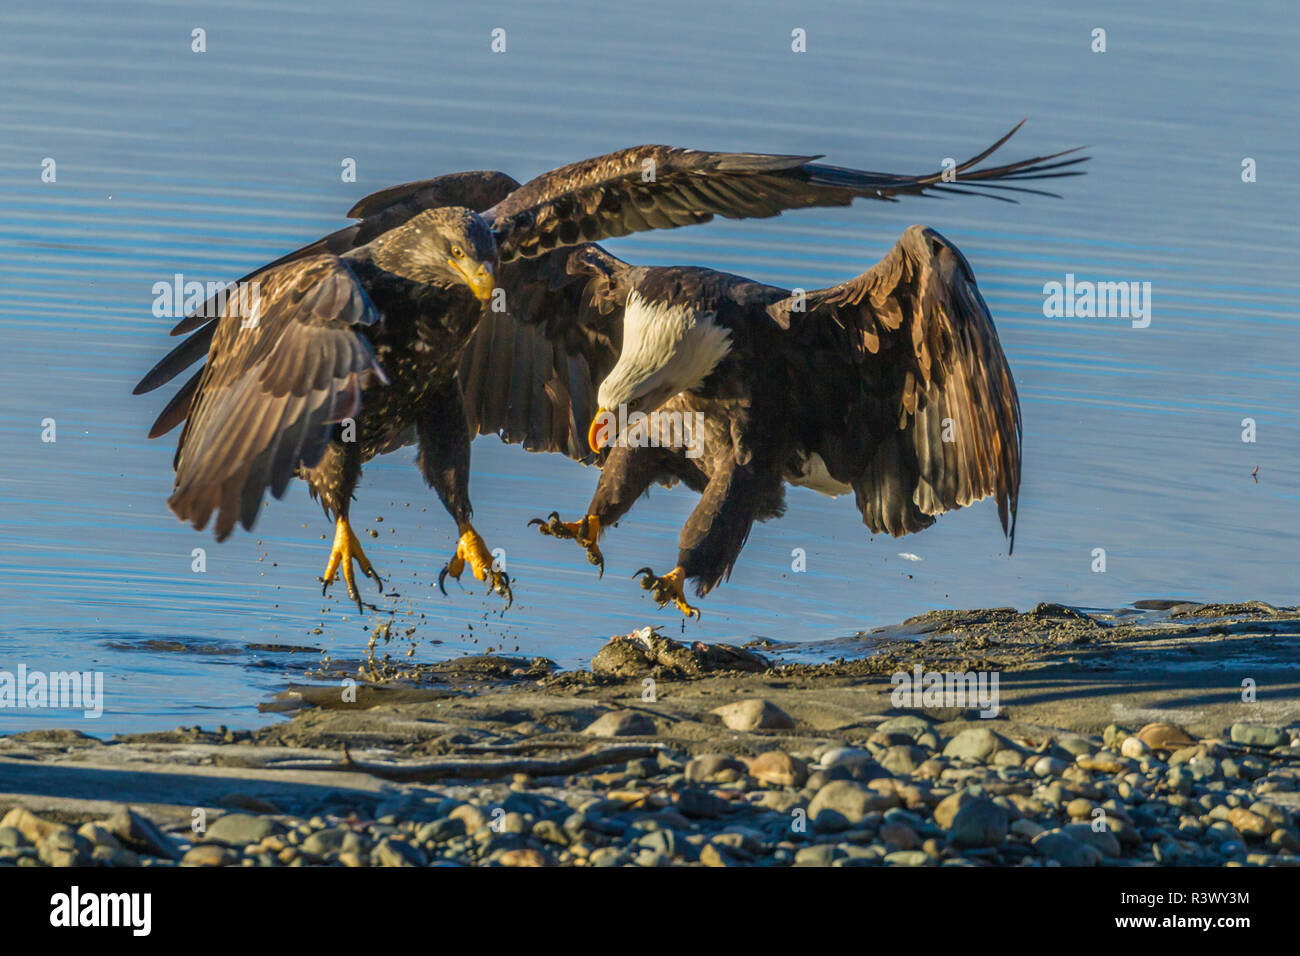 USA, Alaska, Chilkat Bald Eagle Preserve, bald eagle juvenile and adult flying Stock Photo